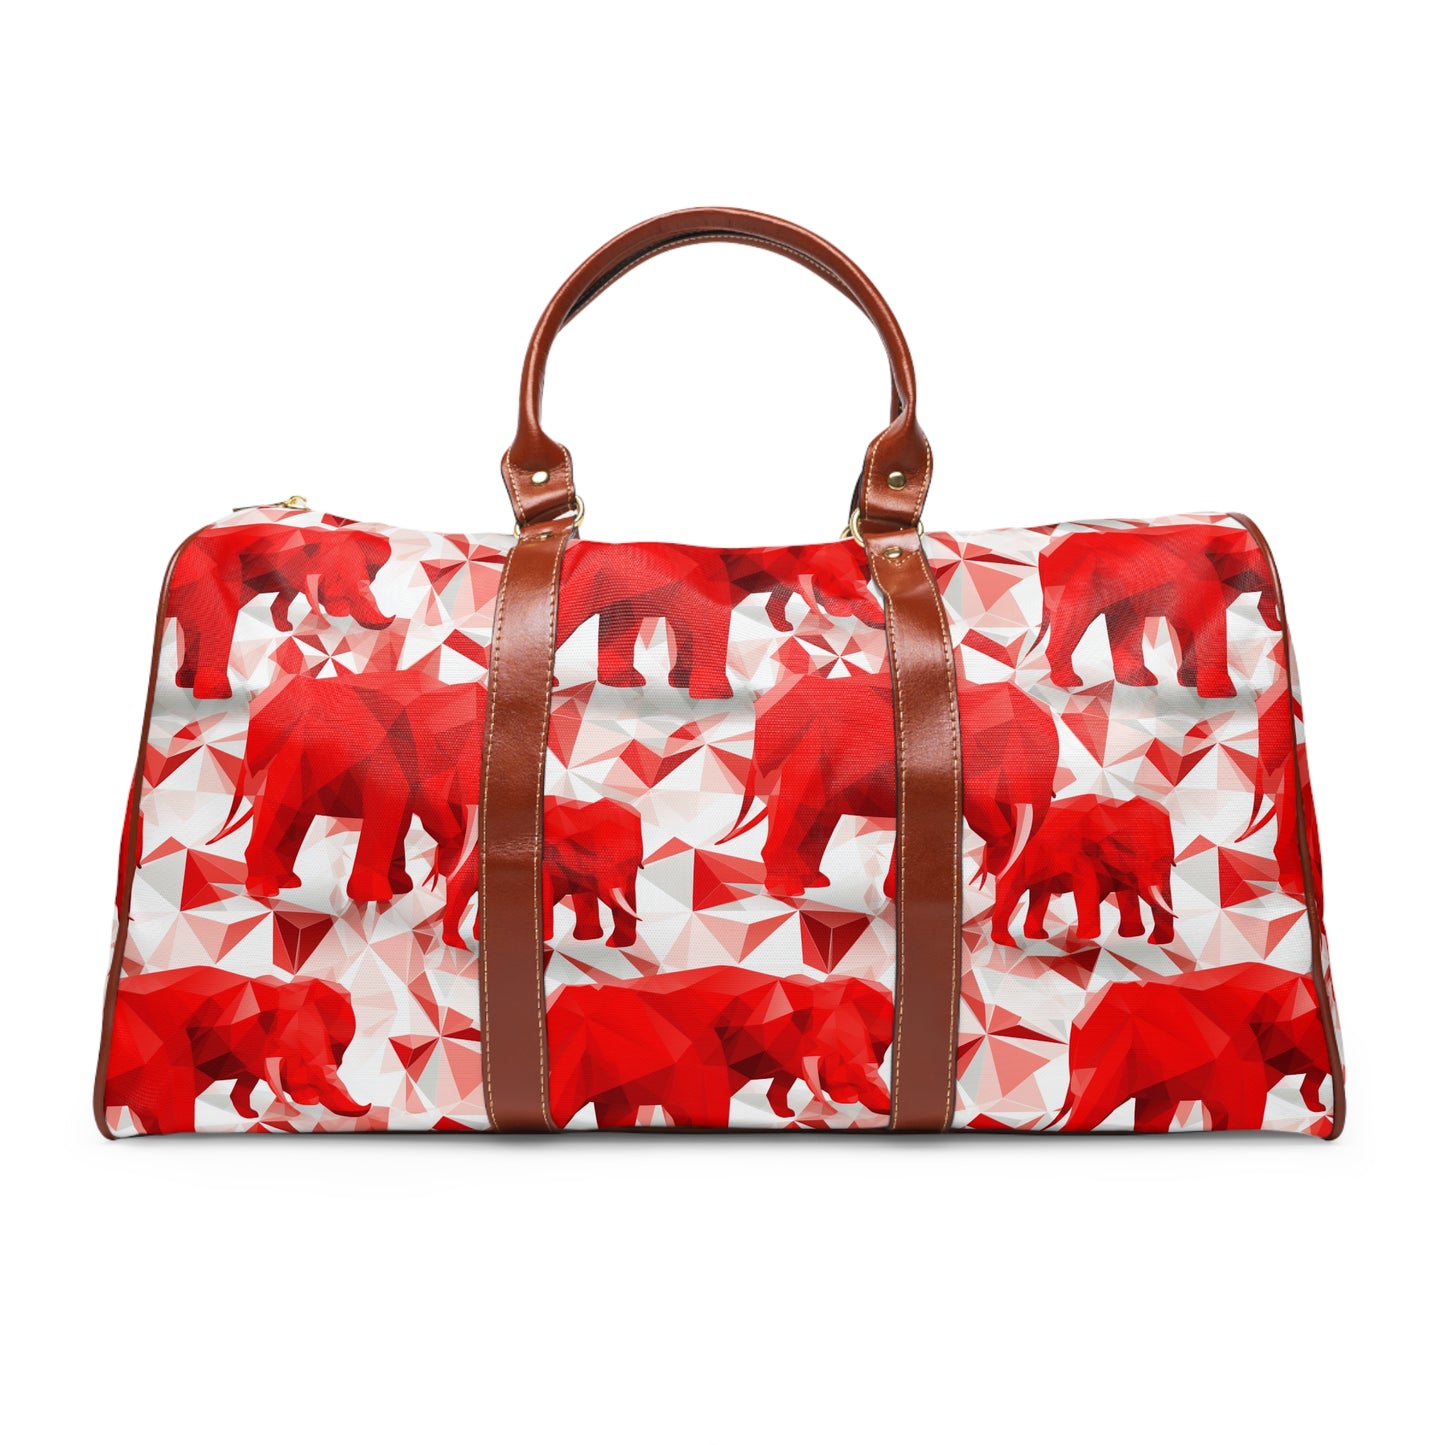 Elephants & Pyramids Waterproof Travel Bag